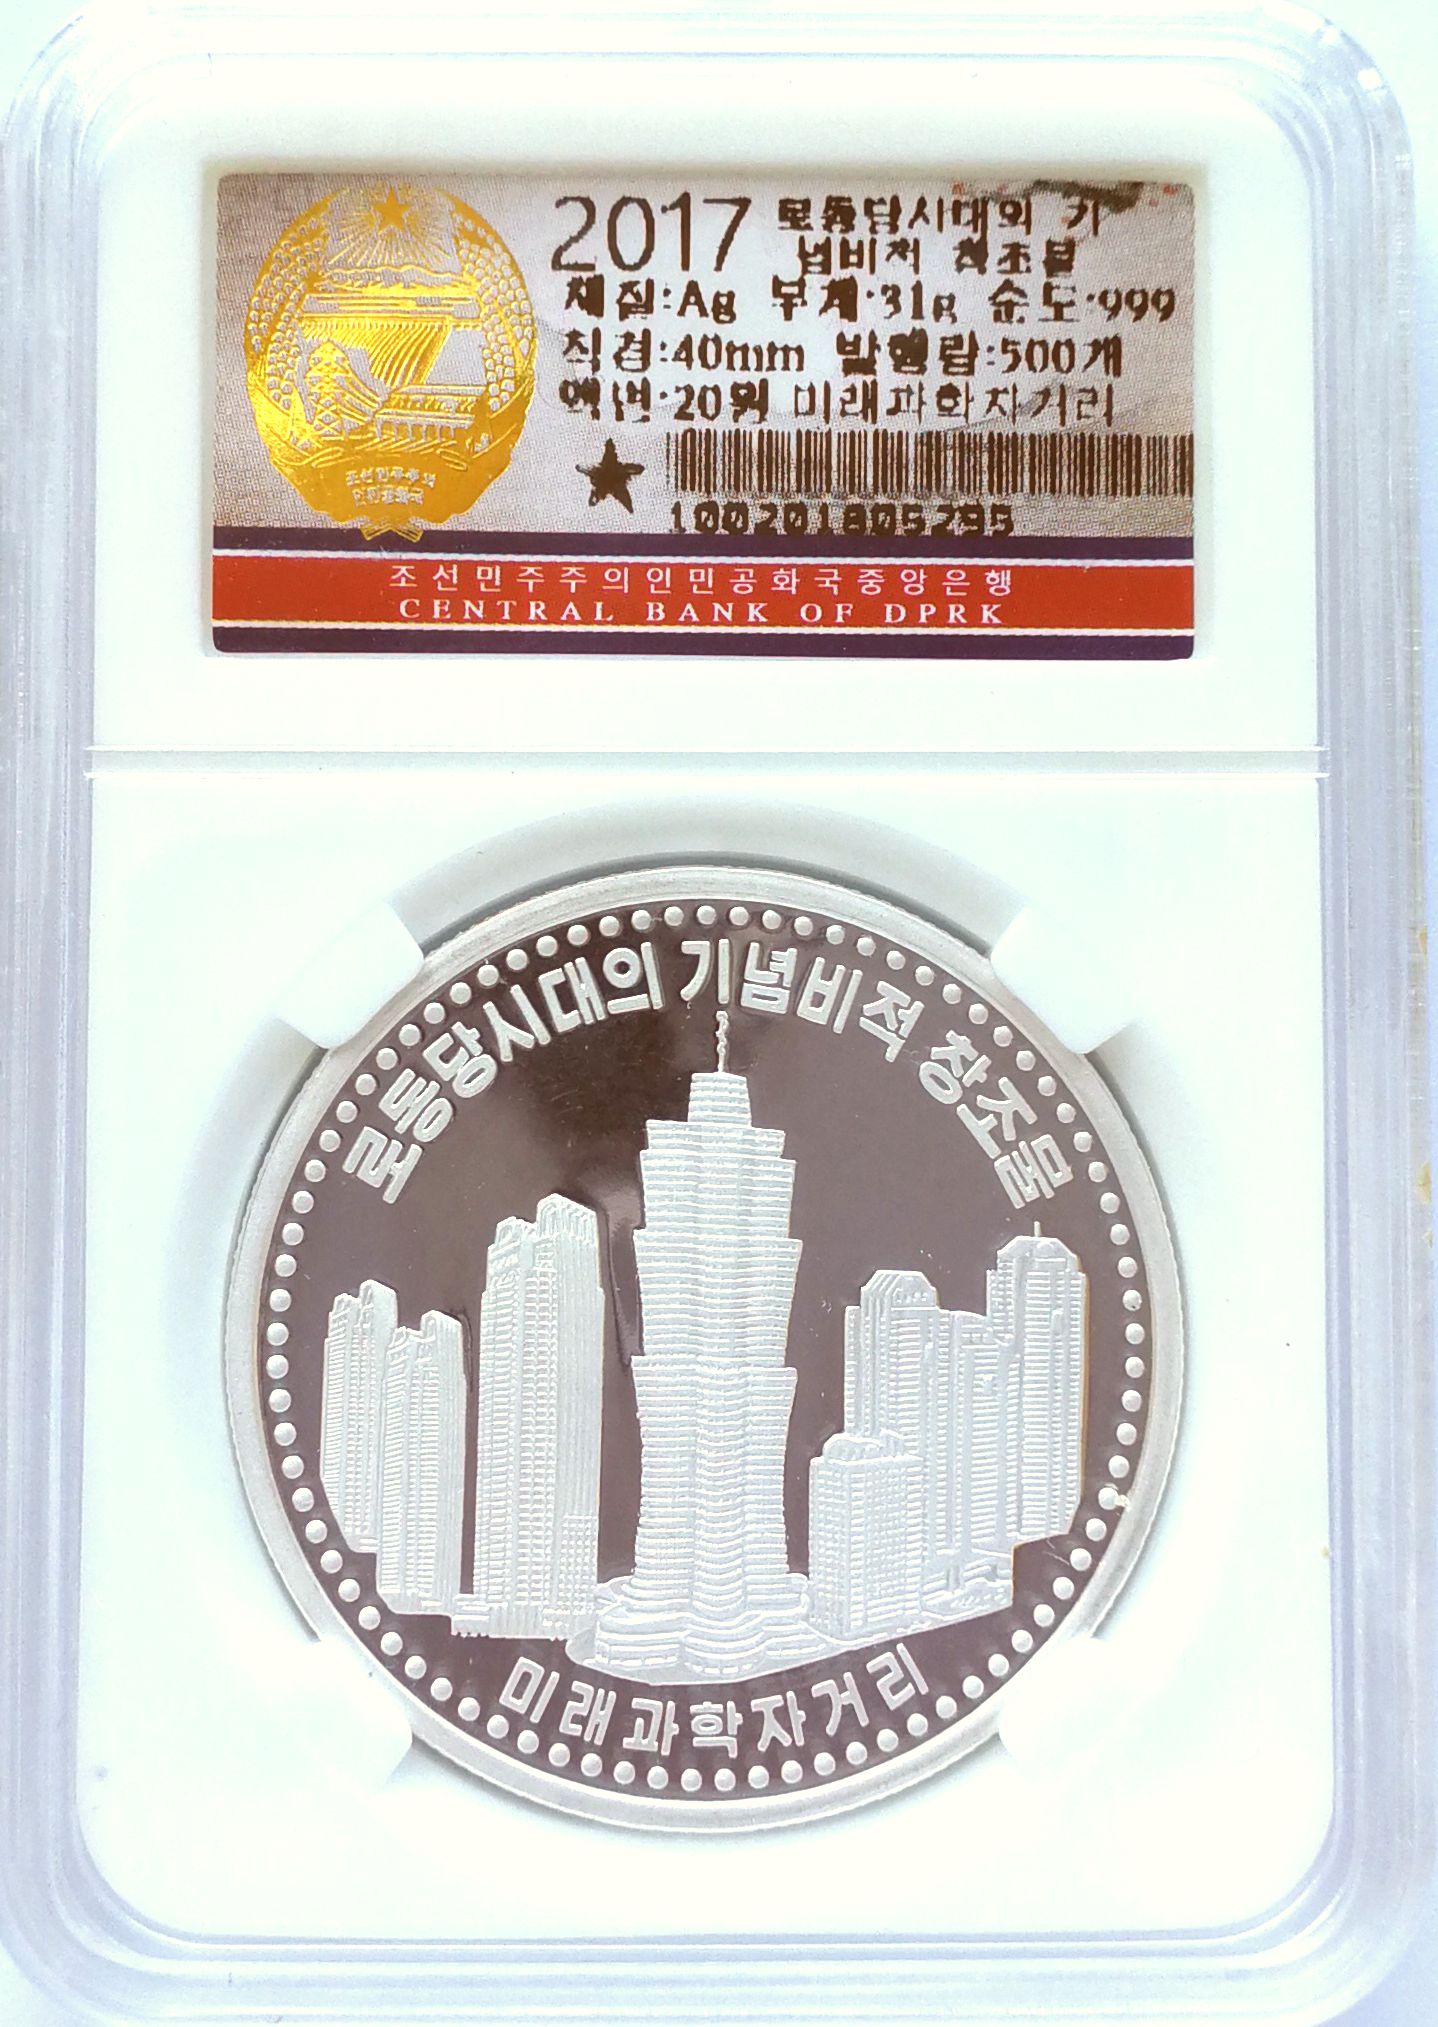 L3566, Korea Proof Silver Coin "Mirae Scientist Street" 2017, Korean Grade